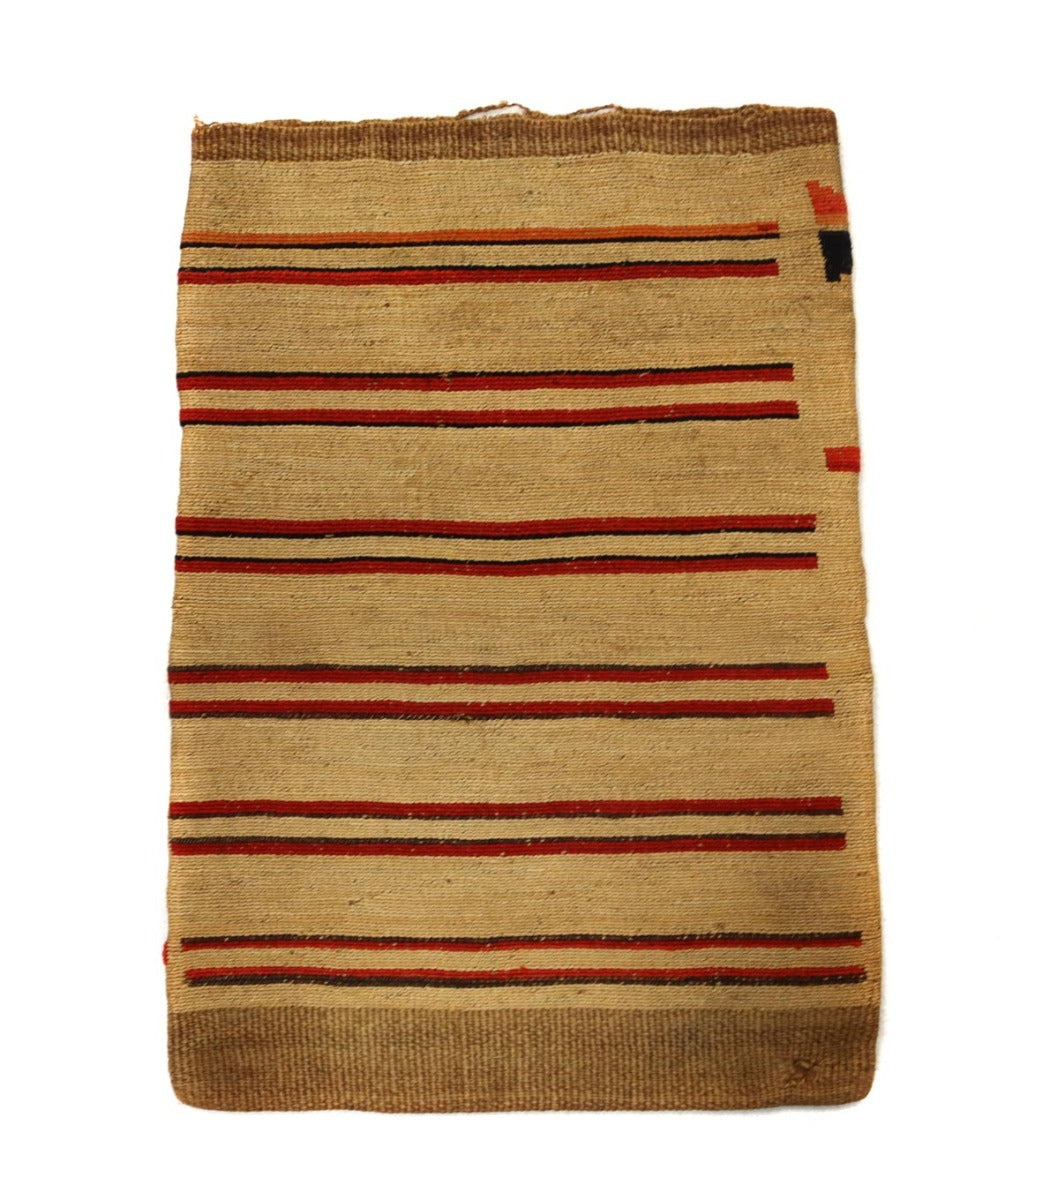 Nez Perce Double-Sided Corn Husk Bag c. 1900s, 19" x 13.25" (SK91963-0222-001) 4
